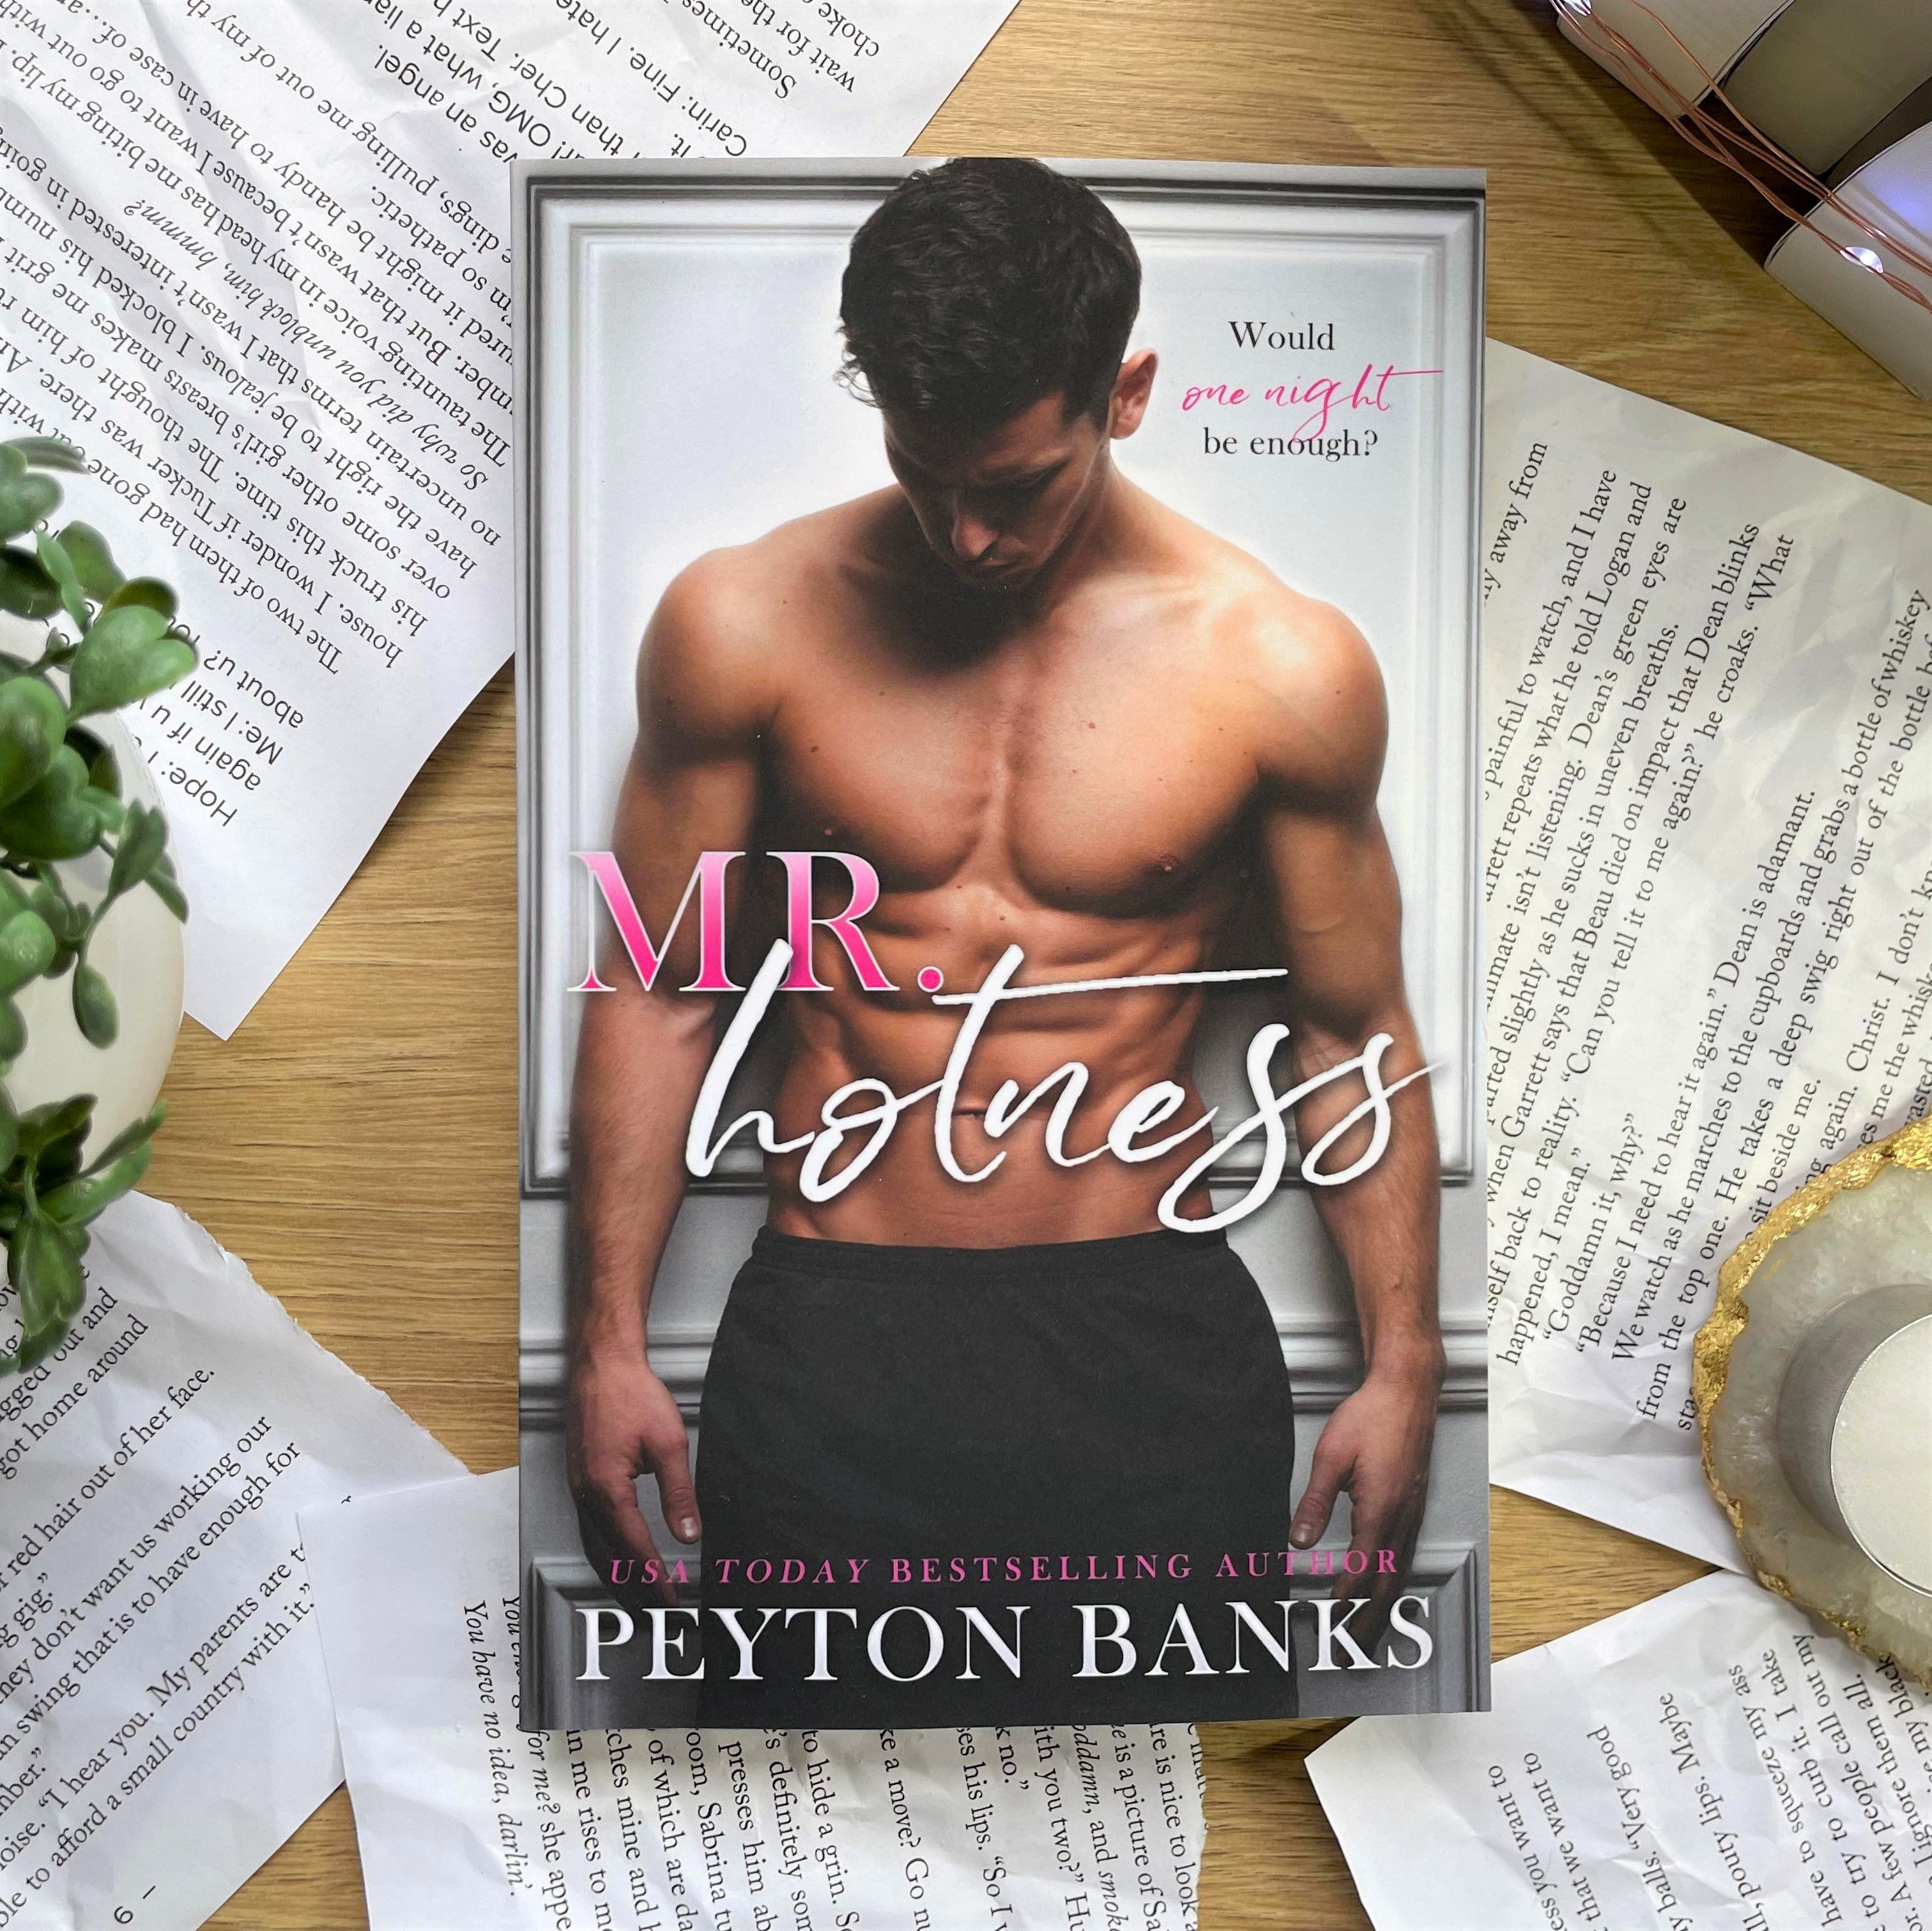 Mr. Hotness by Peyton Banks